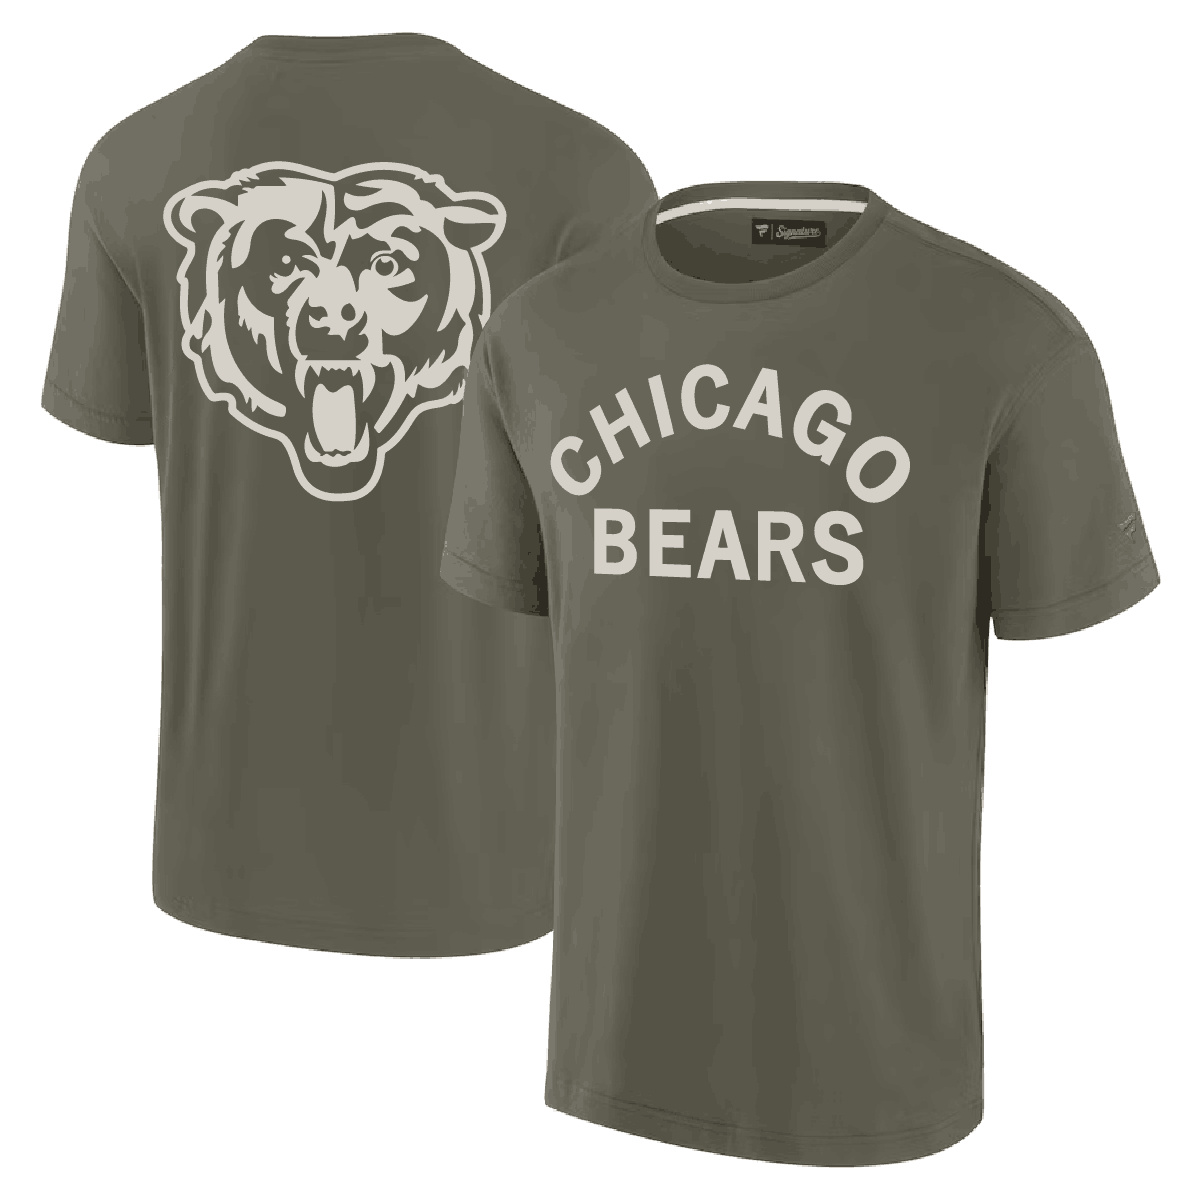 Men's Chicago Bears Olive Elements Super Soft T-Shirt